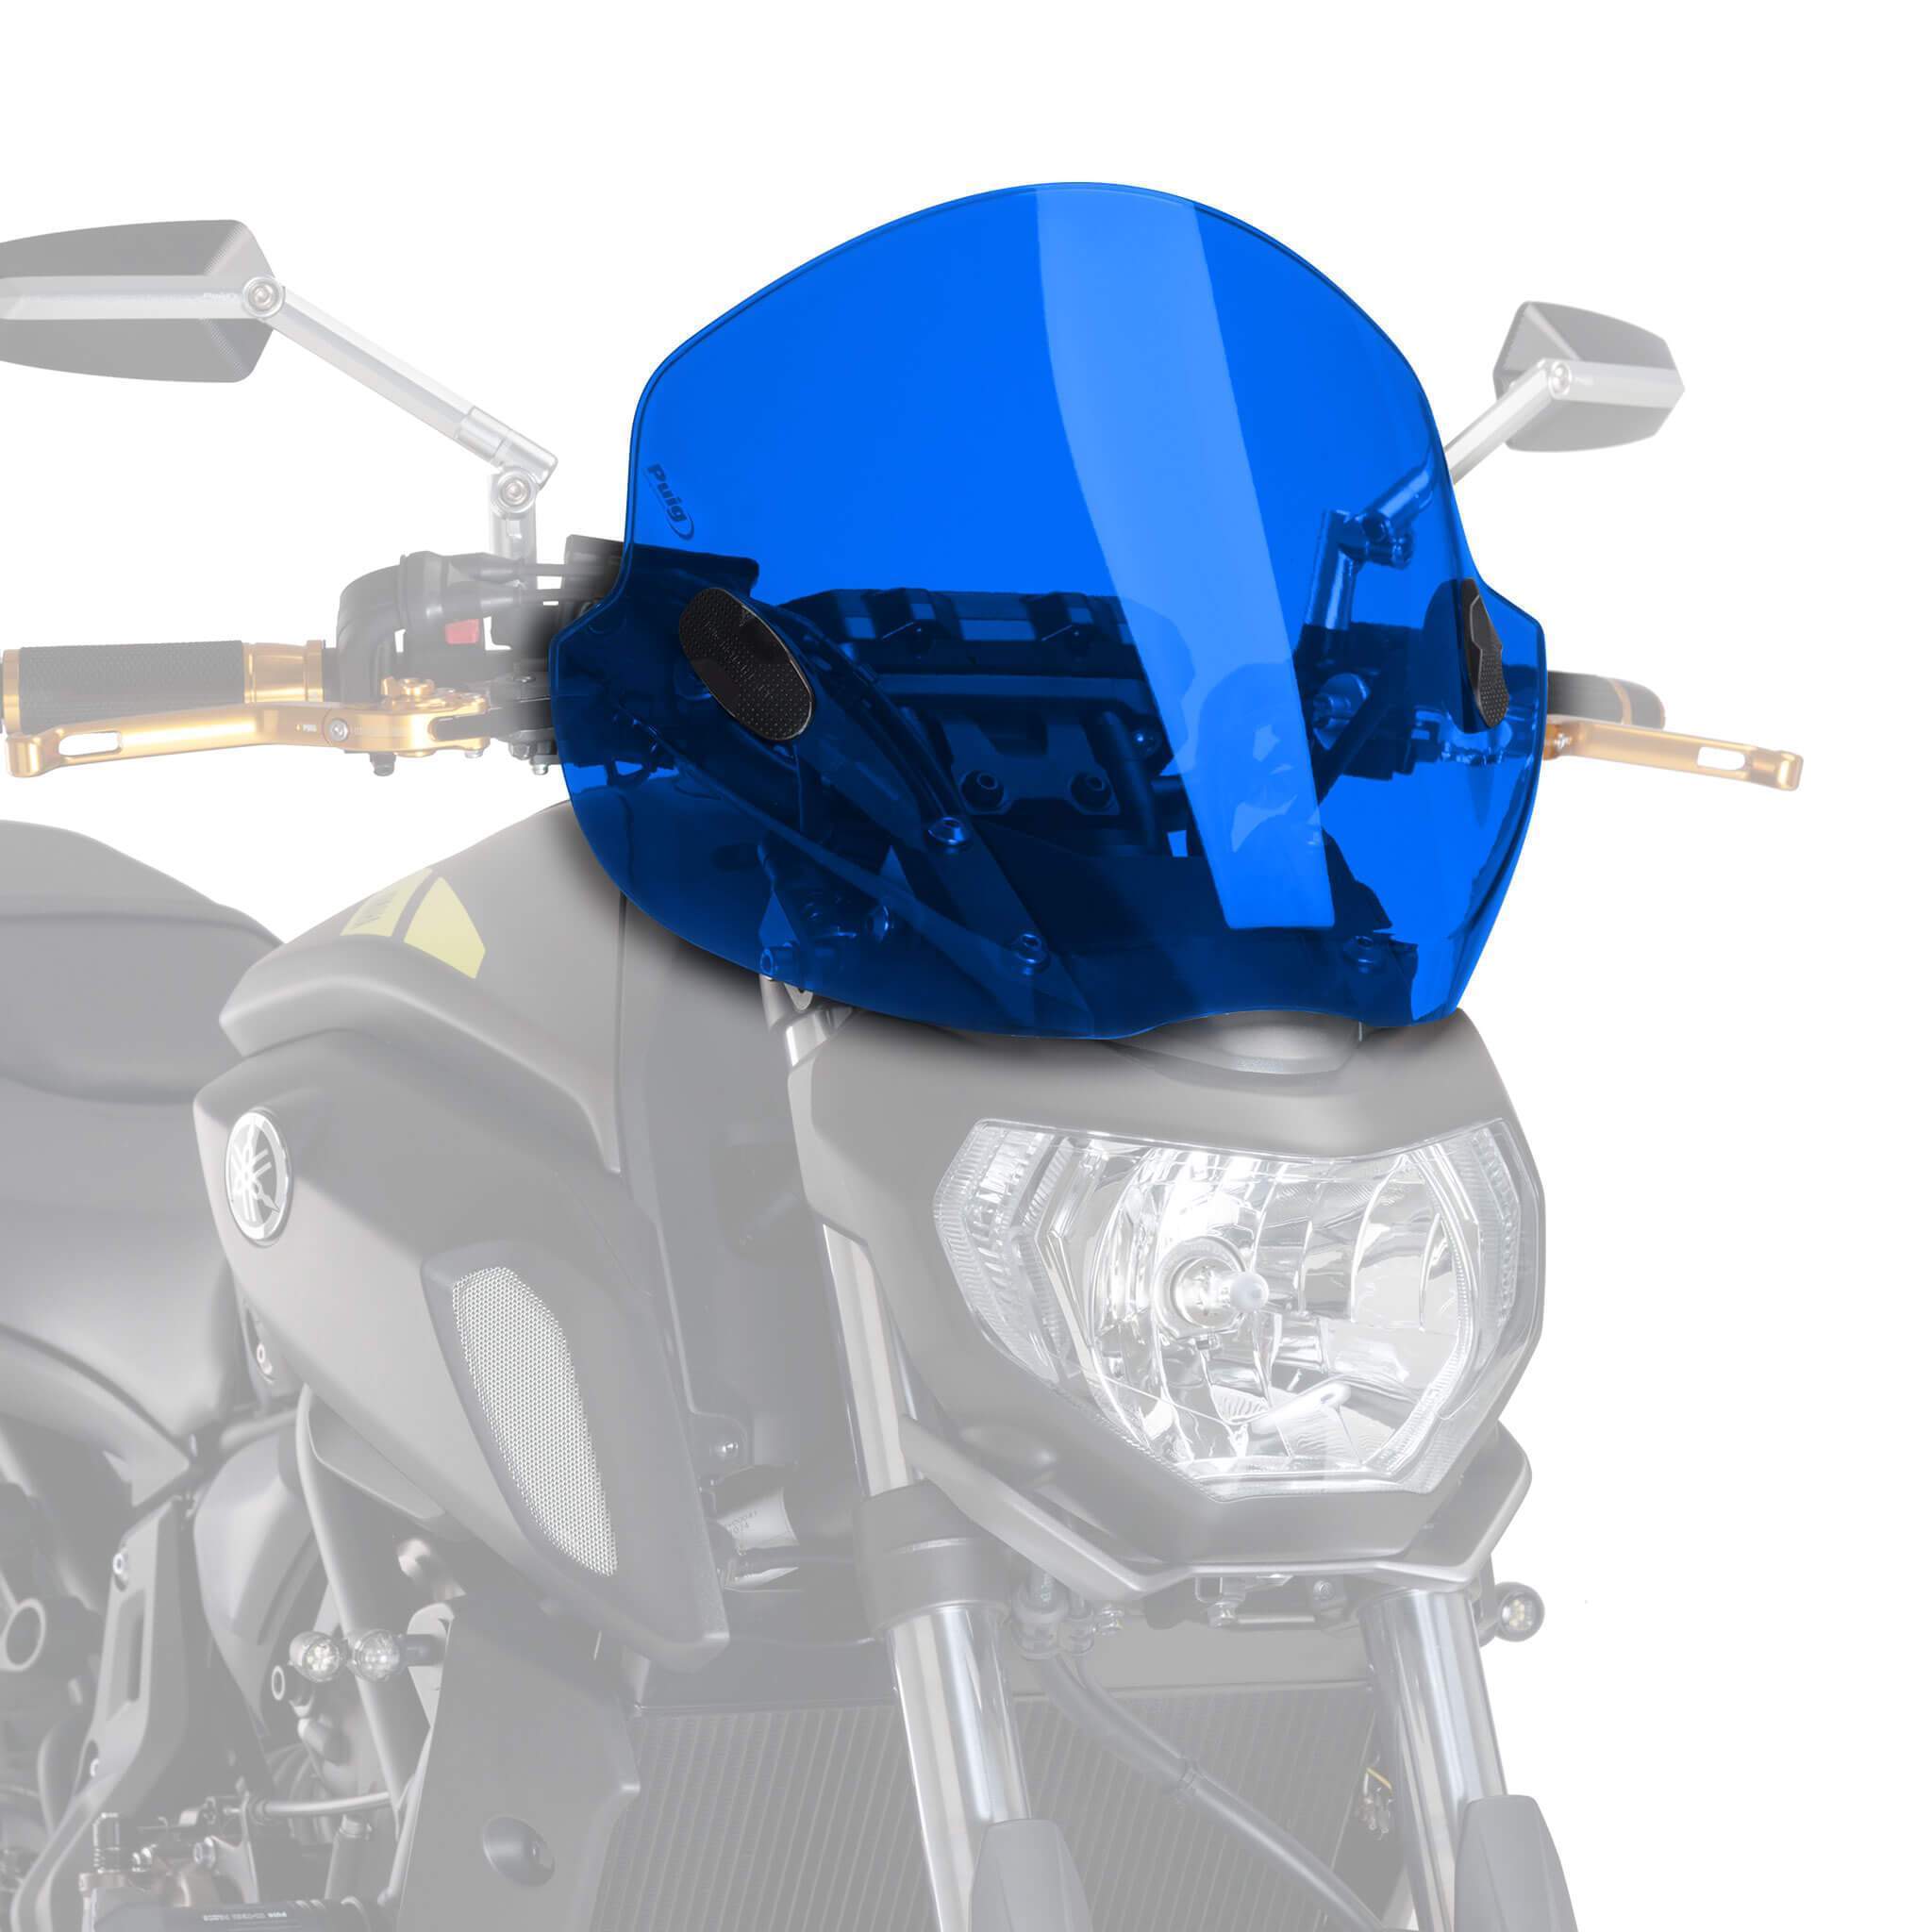 Puig Stream Screen | Blue | Husqvarna Nuda 900/R 2012>2014-M5022A-Screens-Pyramid Motorcycle Accessories